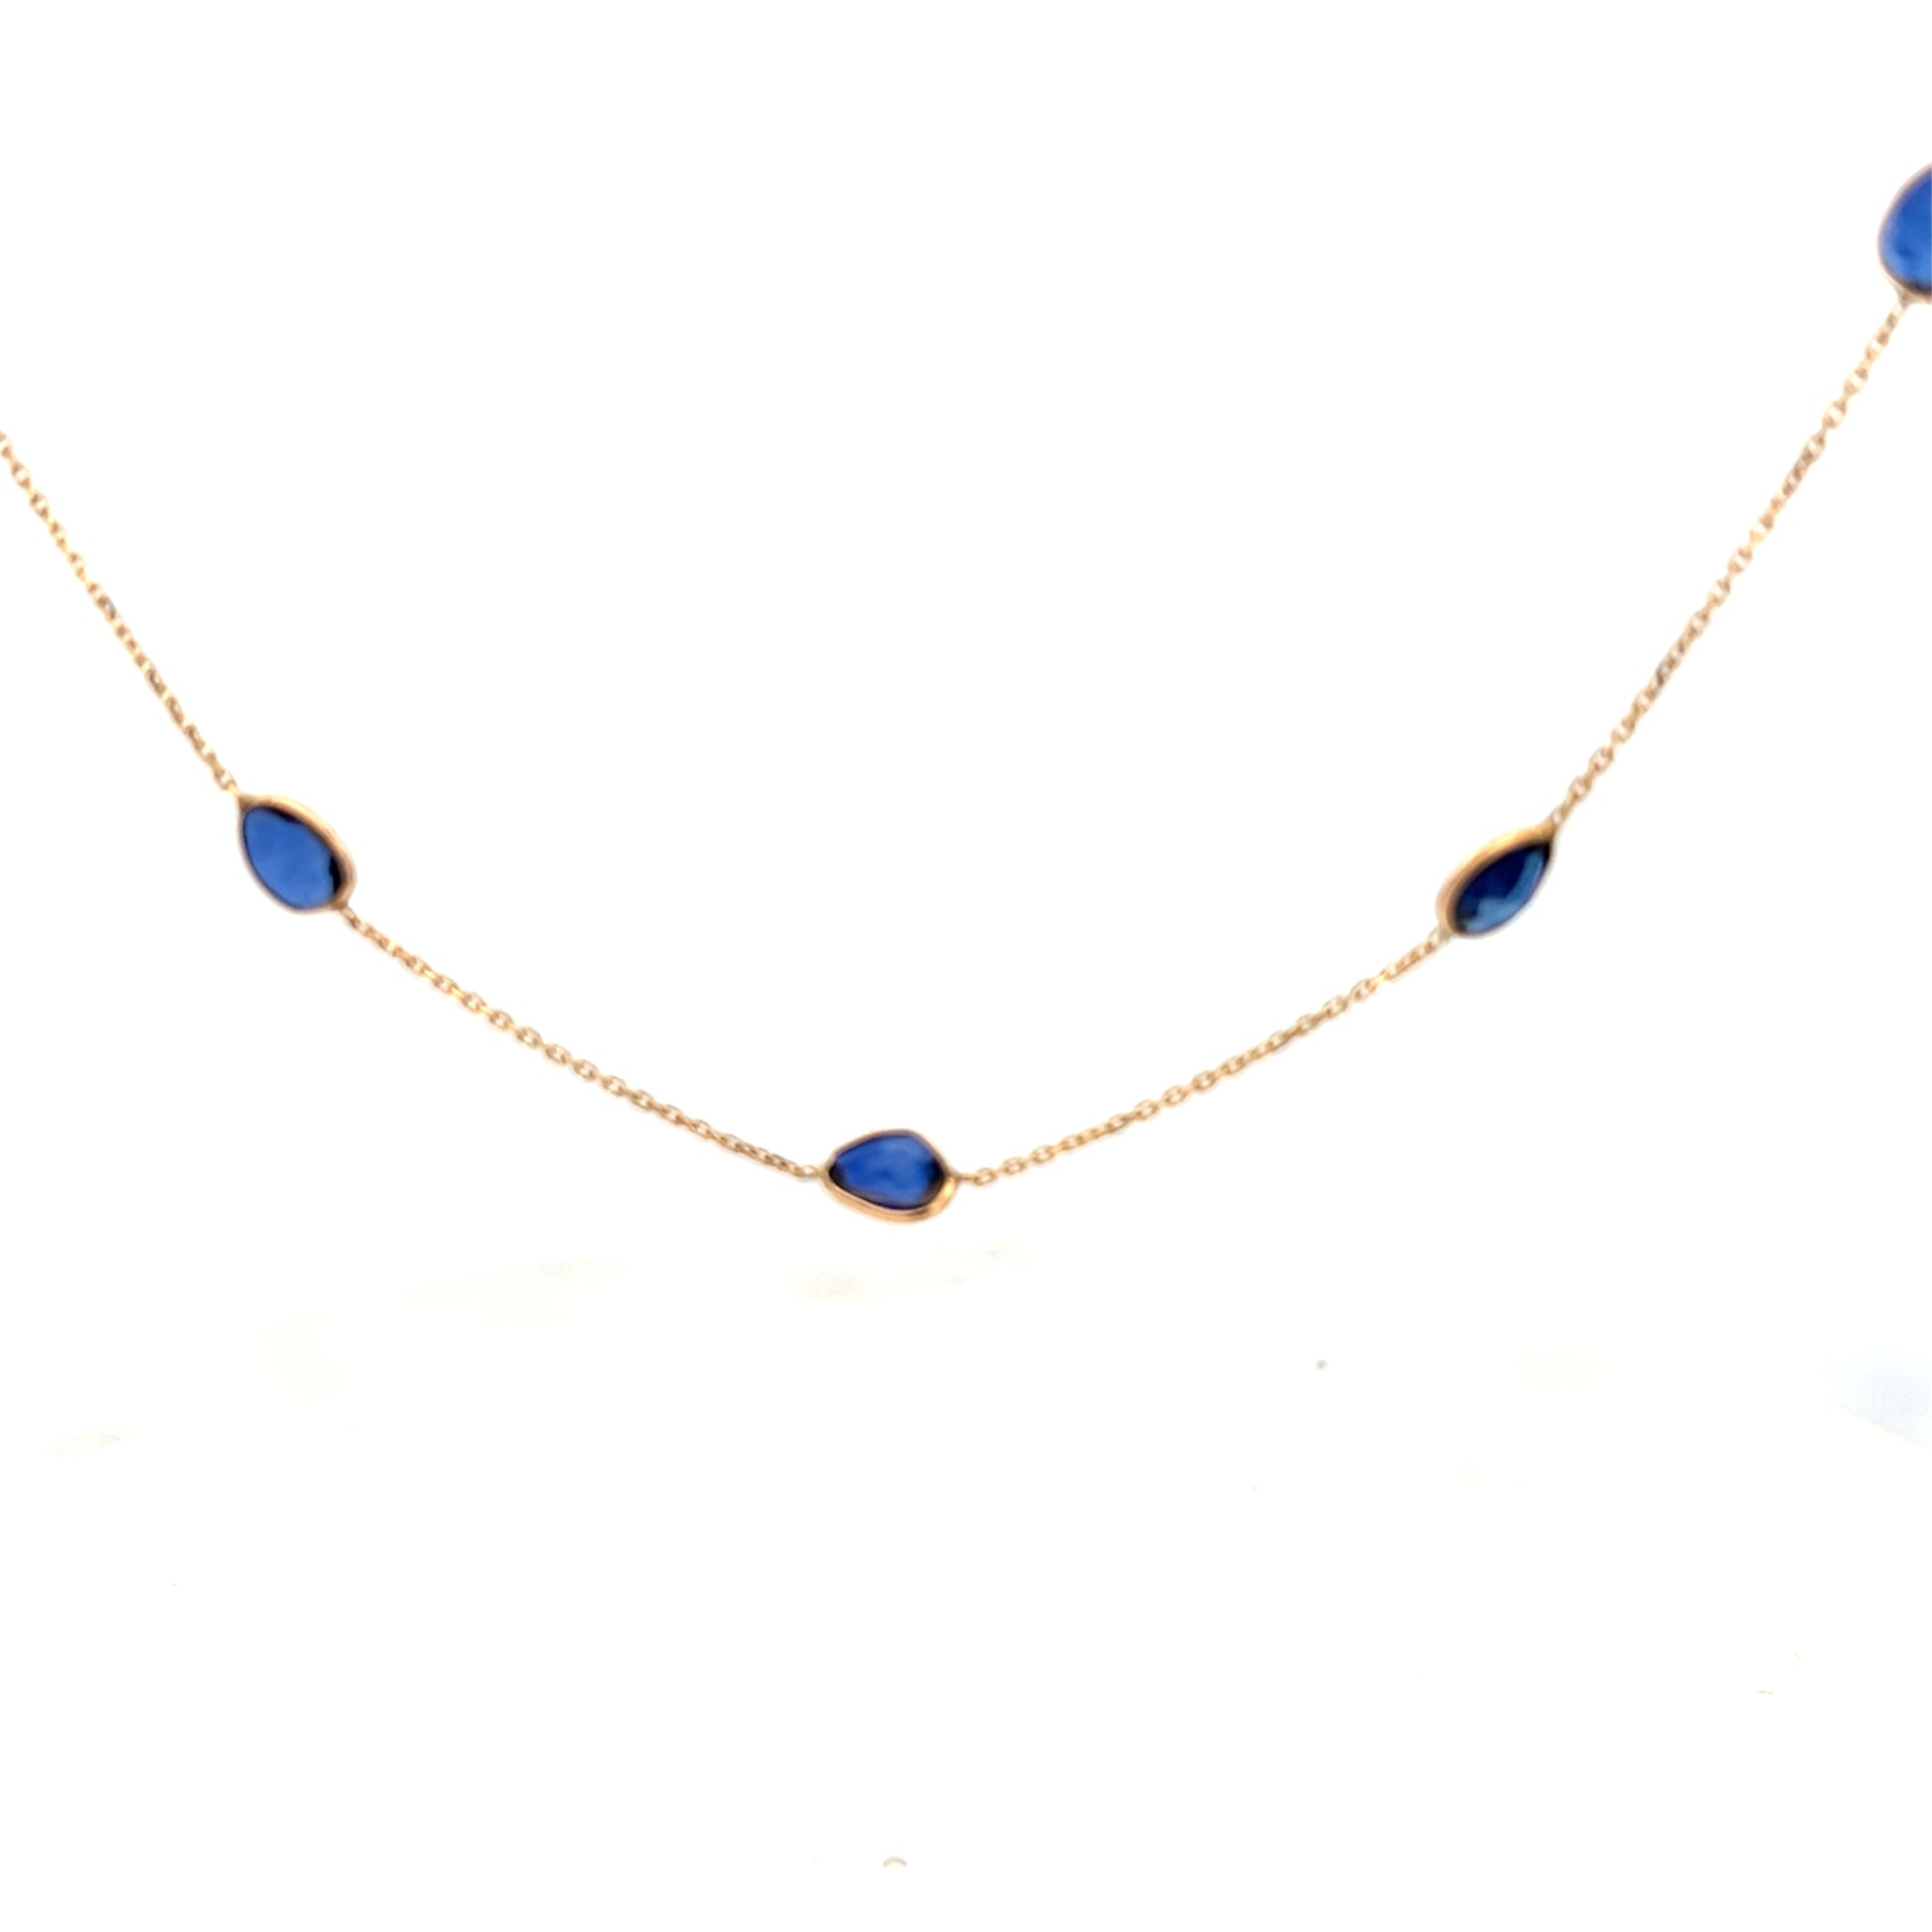 5cttw Gold Sapphire Necklace | Gemstone Necklace